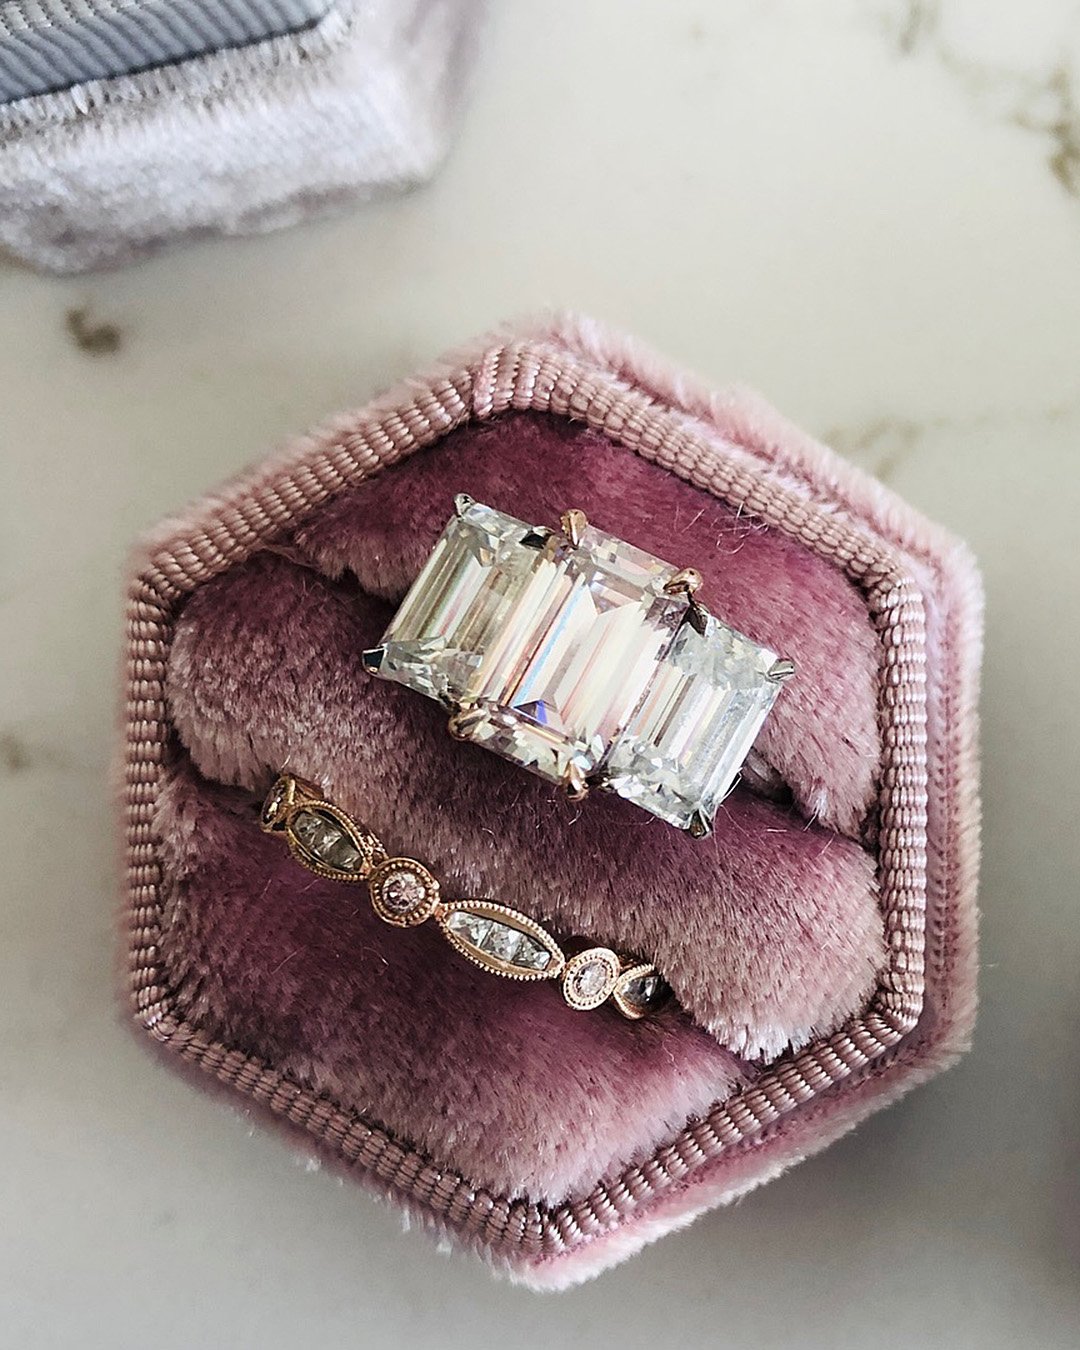 emerald cut engagement rings gold wedding set three stones